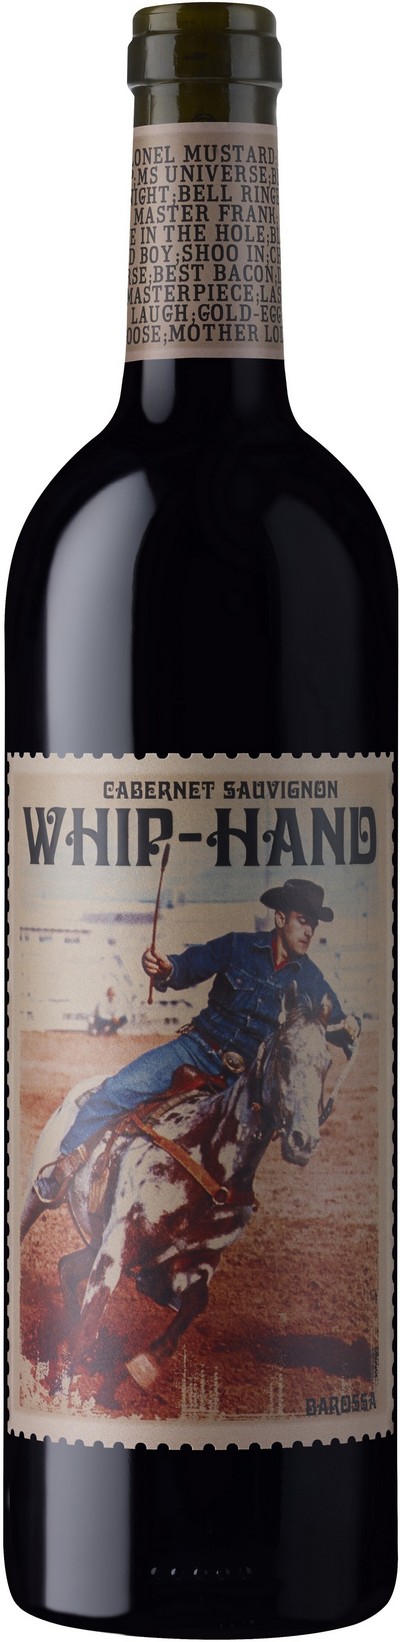 whip-hand-cabernet-2014